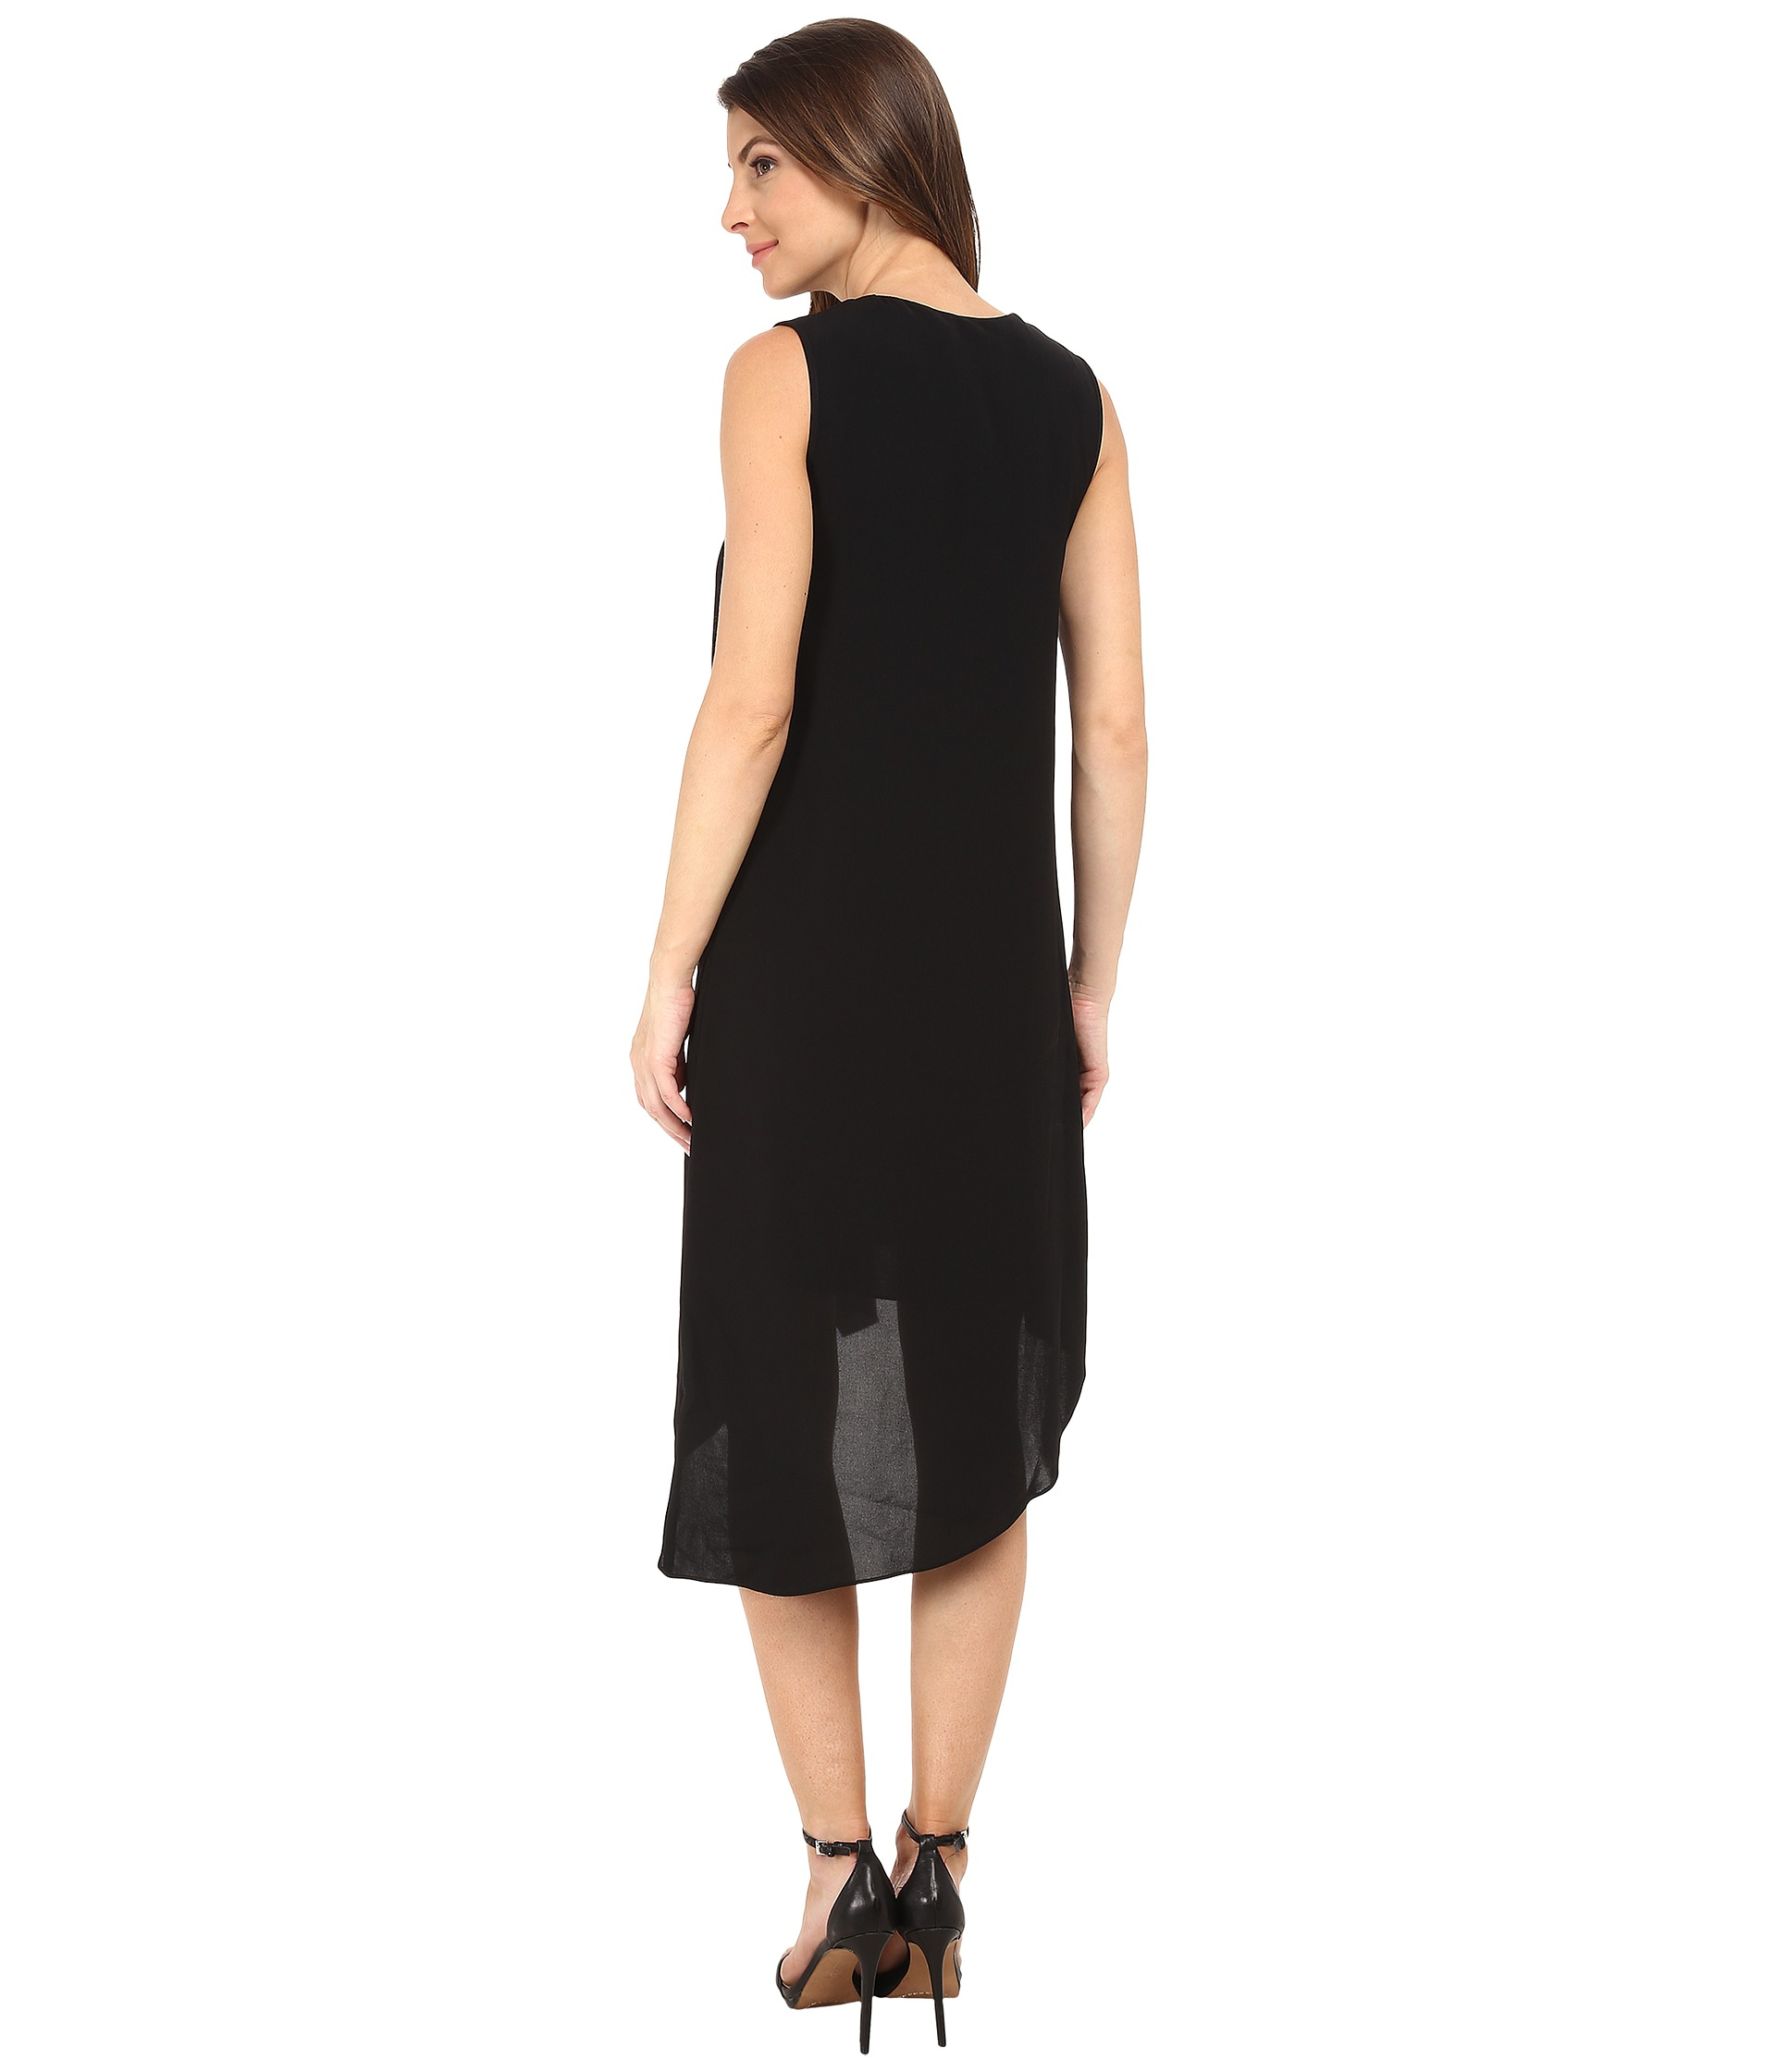 Lyst - Adrianna Papell Asymmetrical Front Drape Dress in Black